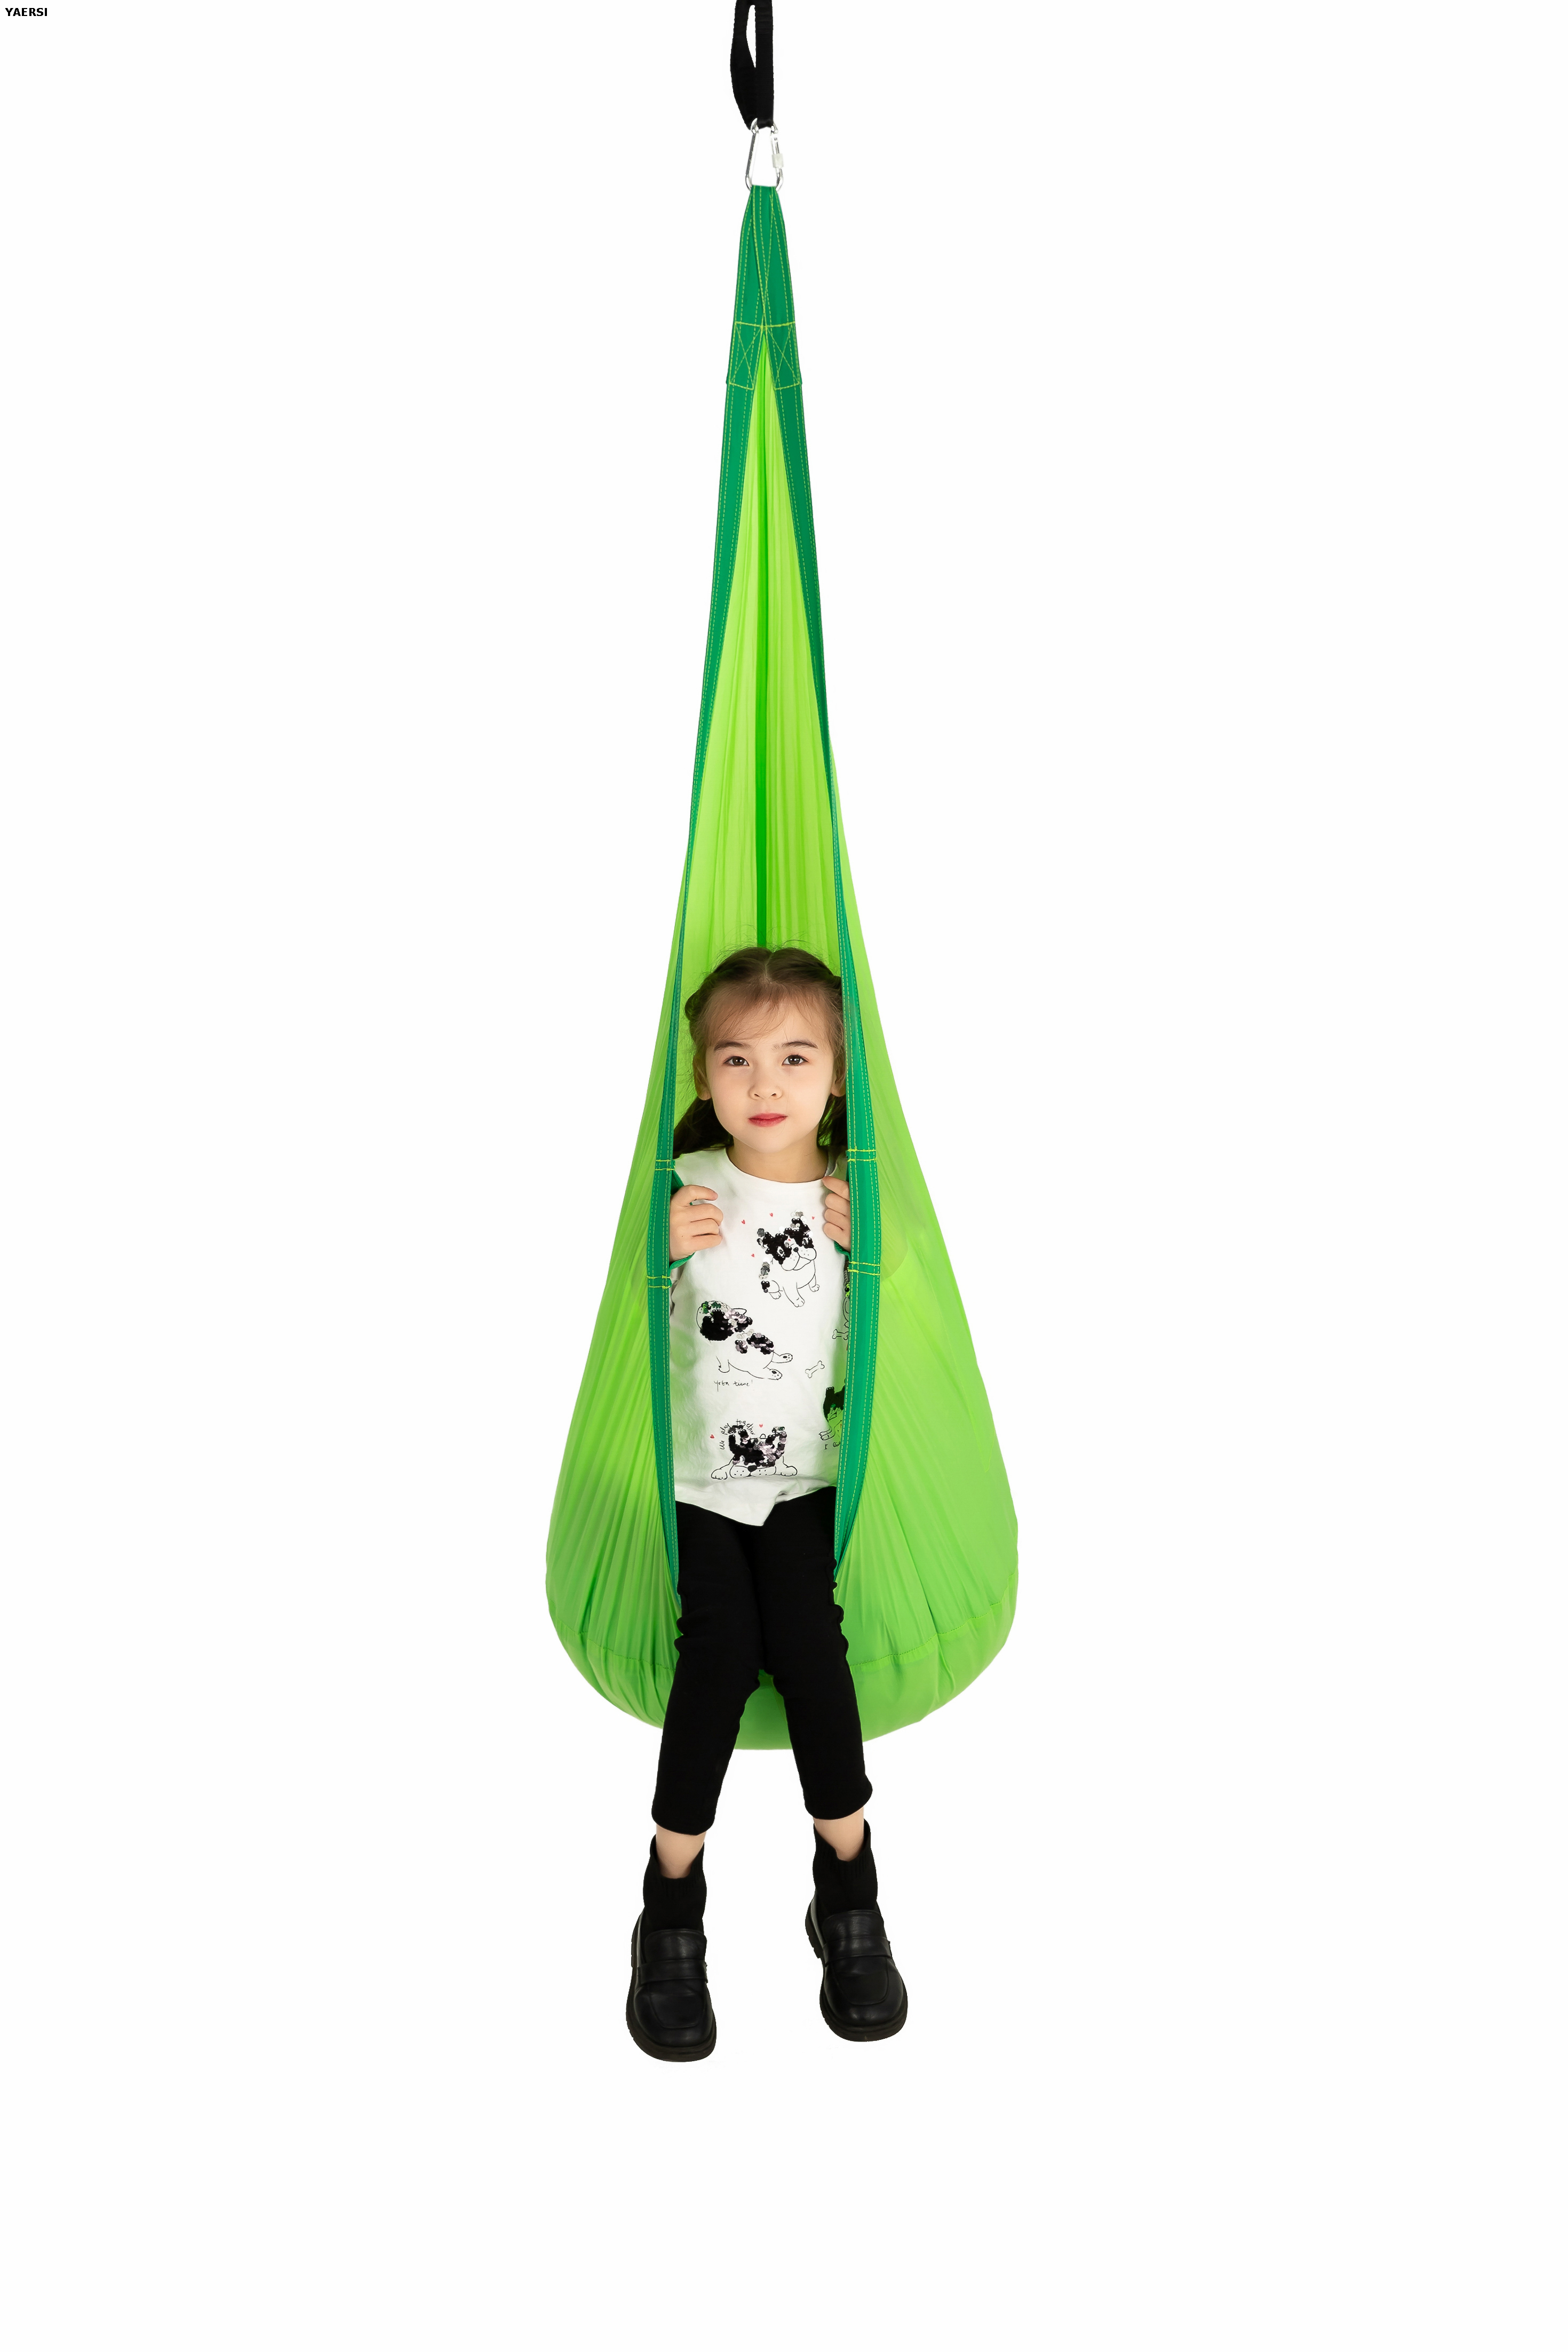 Nylon Hammock Pod Kid Swing for Indoor And Outdoor-green